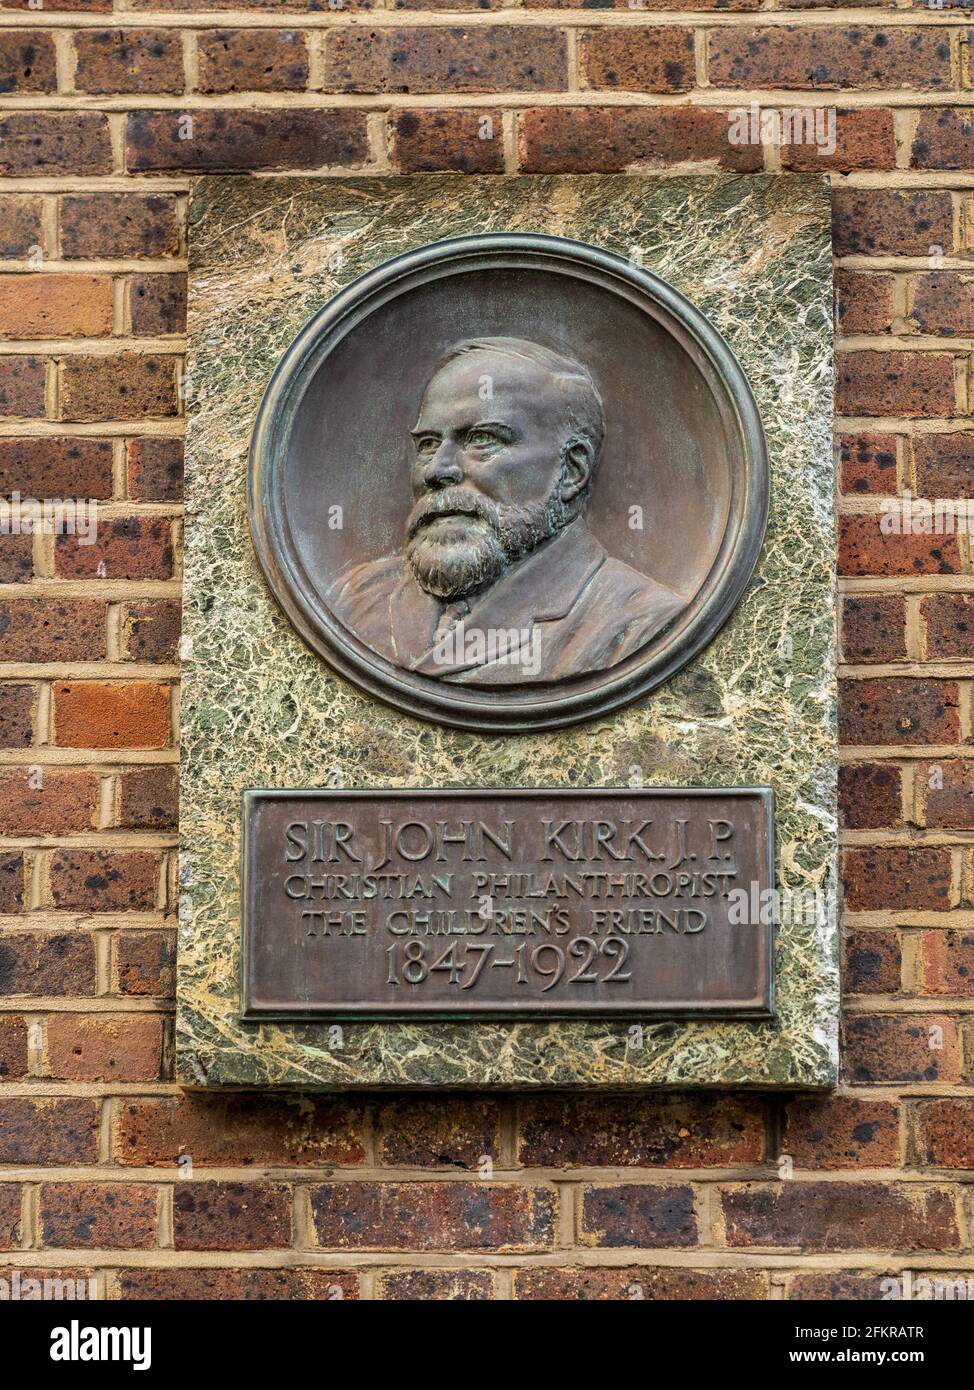 Sir John Kirk memorial plaque on 31-32 John Street London WC1. Sir John Kirk, J.P., Christian philanthropist, the children's friend, 1847 - 1922. Stock Photo